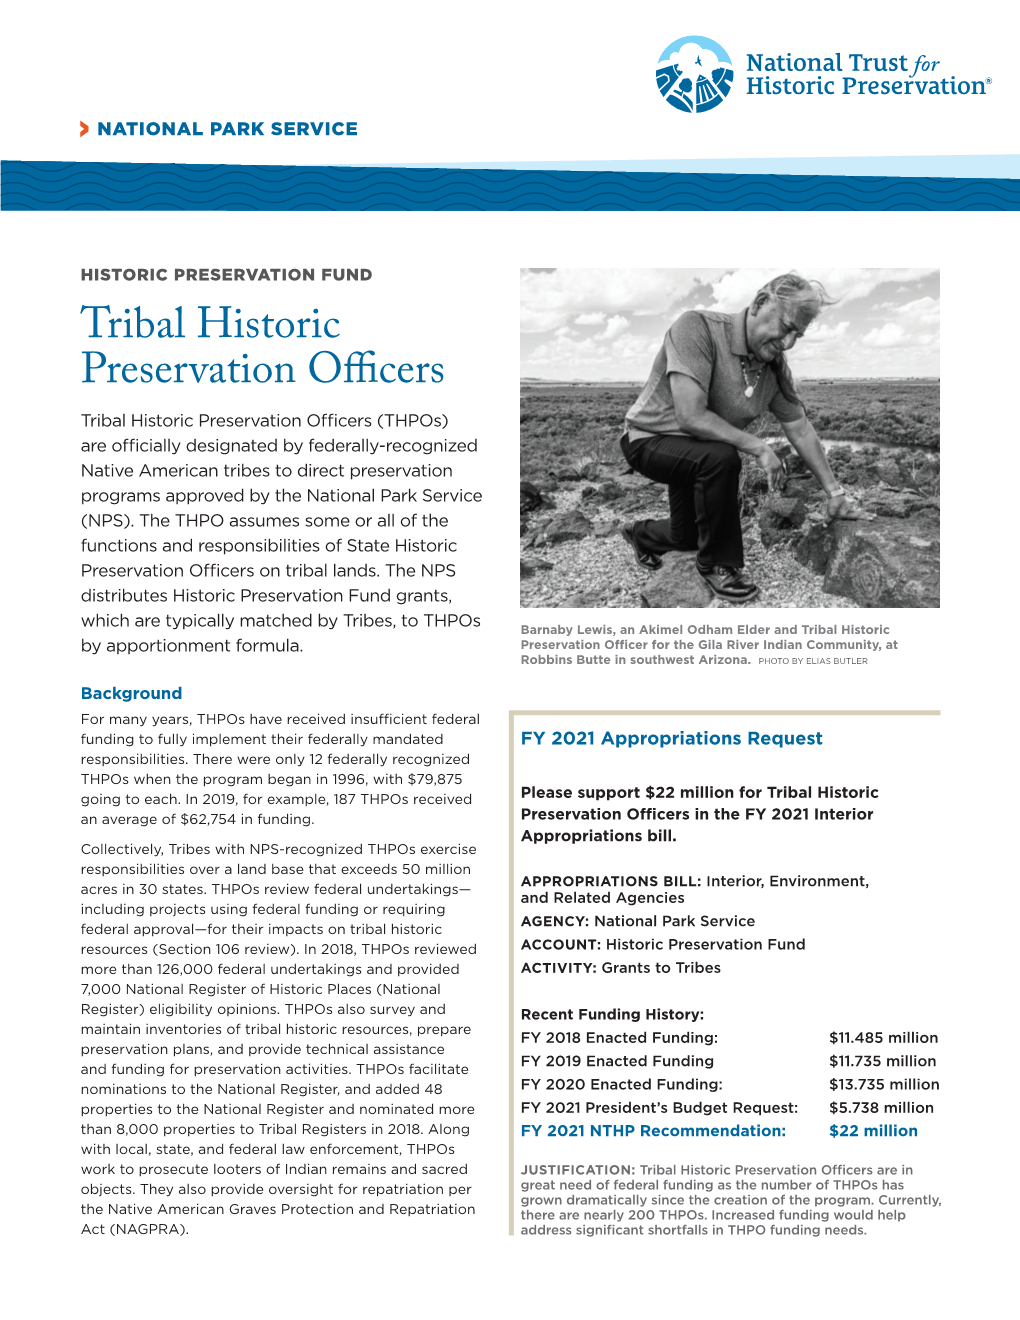 Tribal Historic Preservation Officers